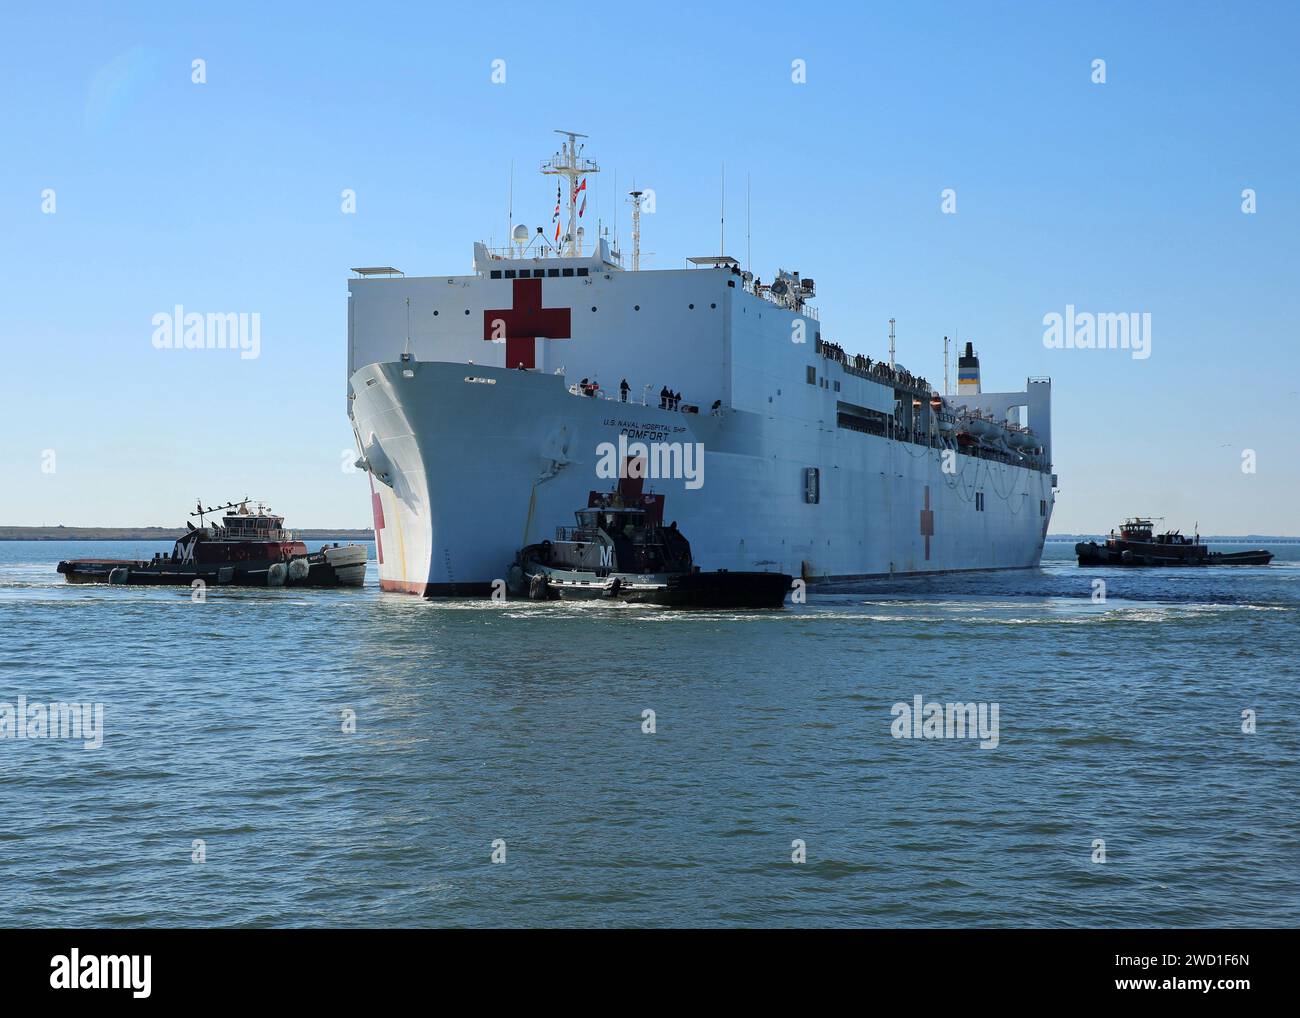 The U.S. Navy hospital ship USNS Comfort arrives at Naval Station Norfolk, Virginia. Stock Photo